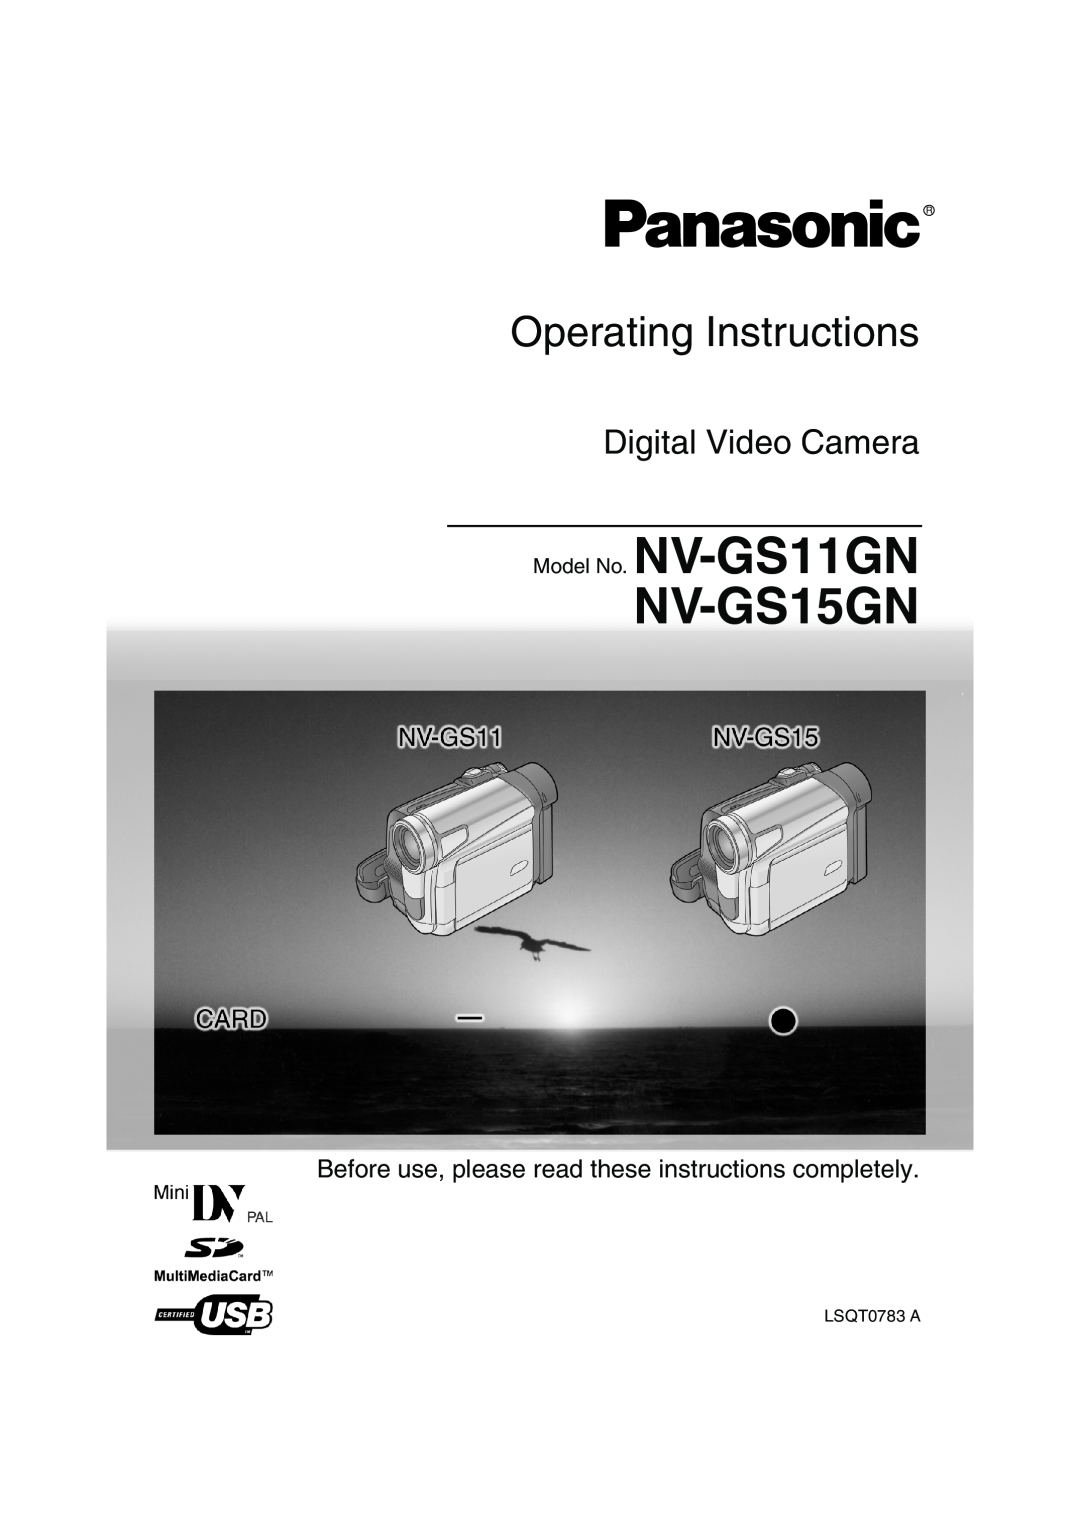 Panasonic operating instructions NV-GS15GN, Operating Instructions, Digital Video Camera, Model No. NV-GS11GN 